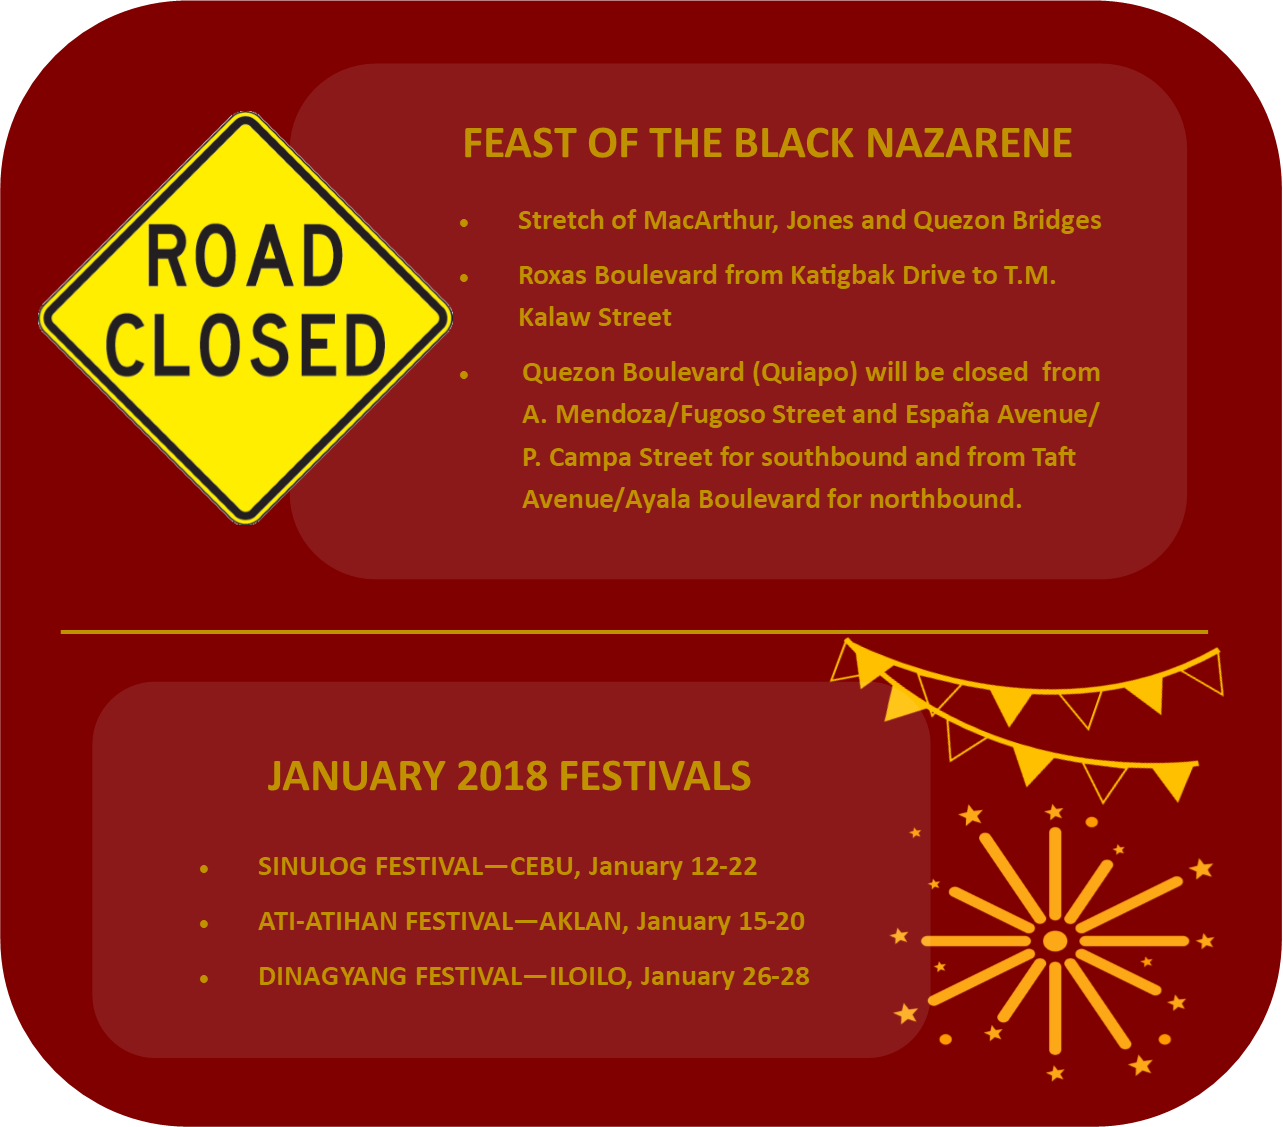 Road-Closure-Manila-for-the-Feast-of-Black-Nazarene